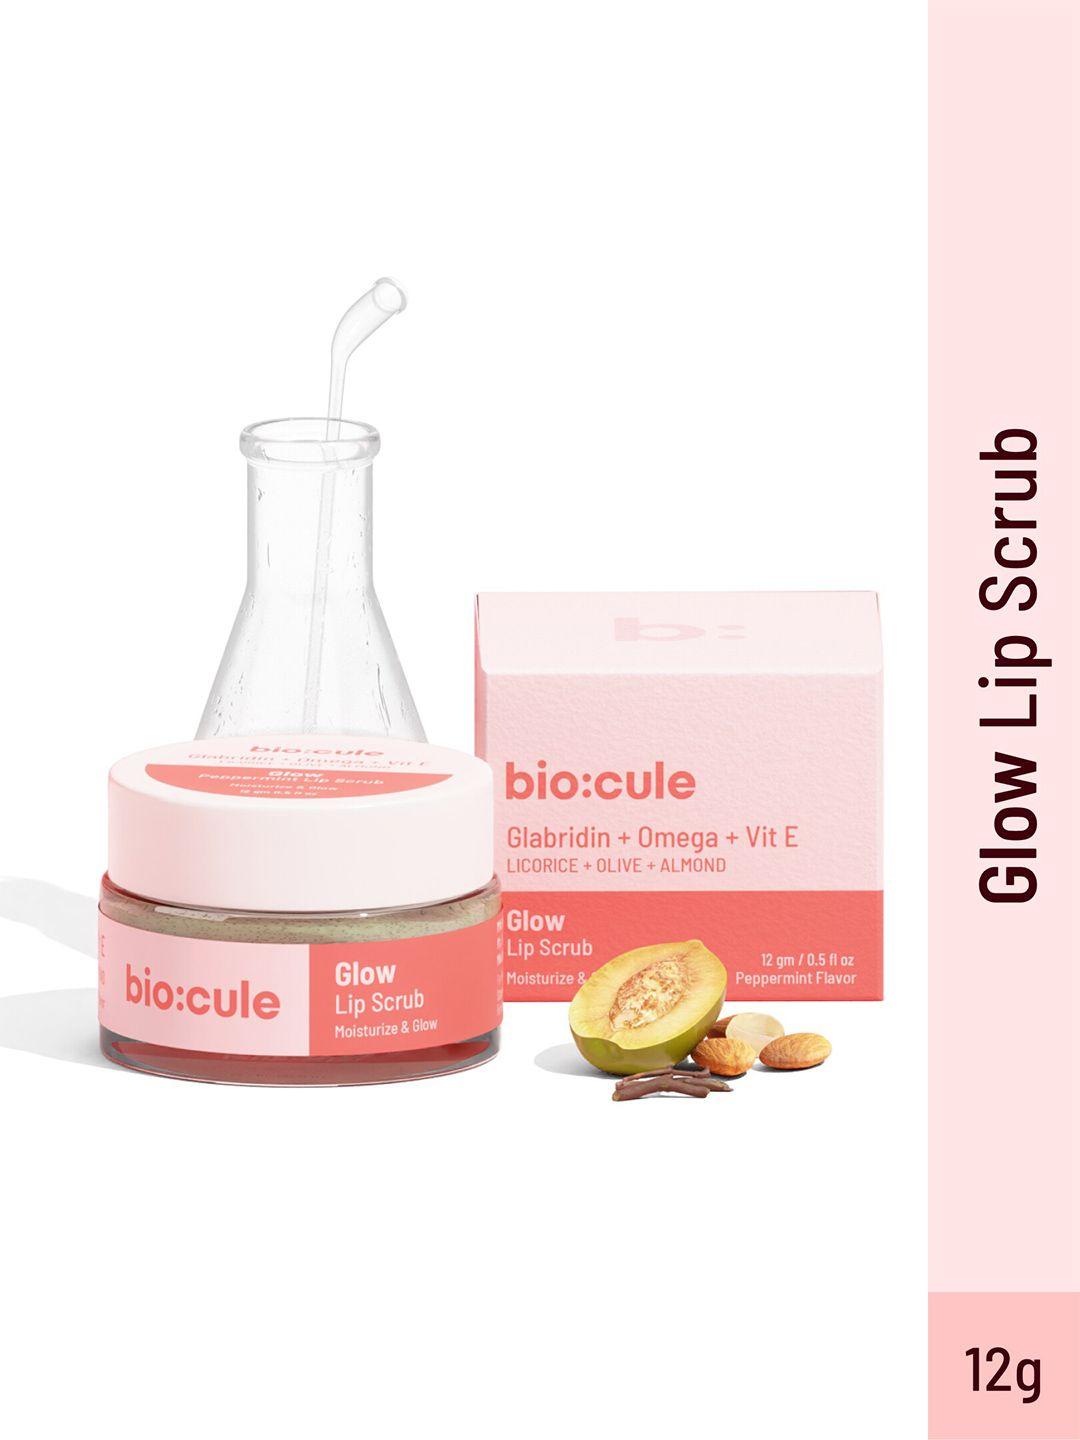 biocule glabridin + omega + vit e + licorice + olive glow lip scrub - 12g